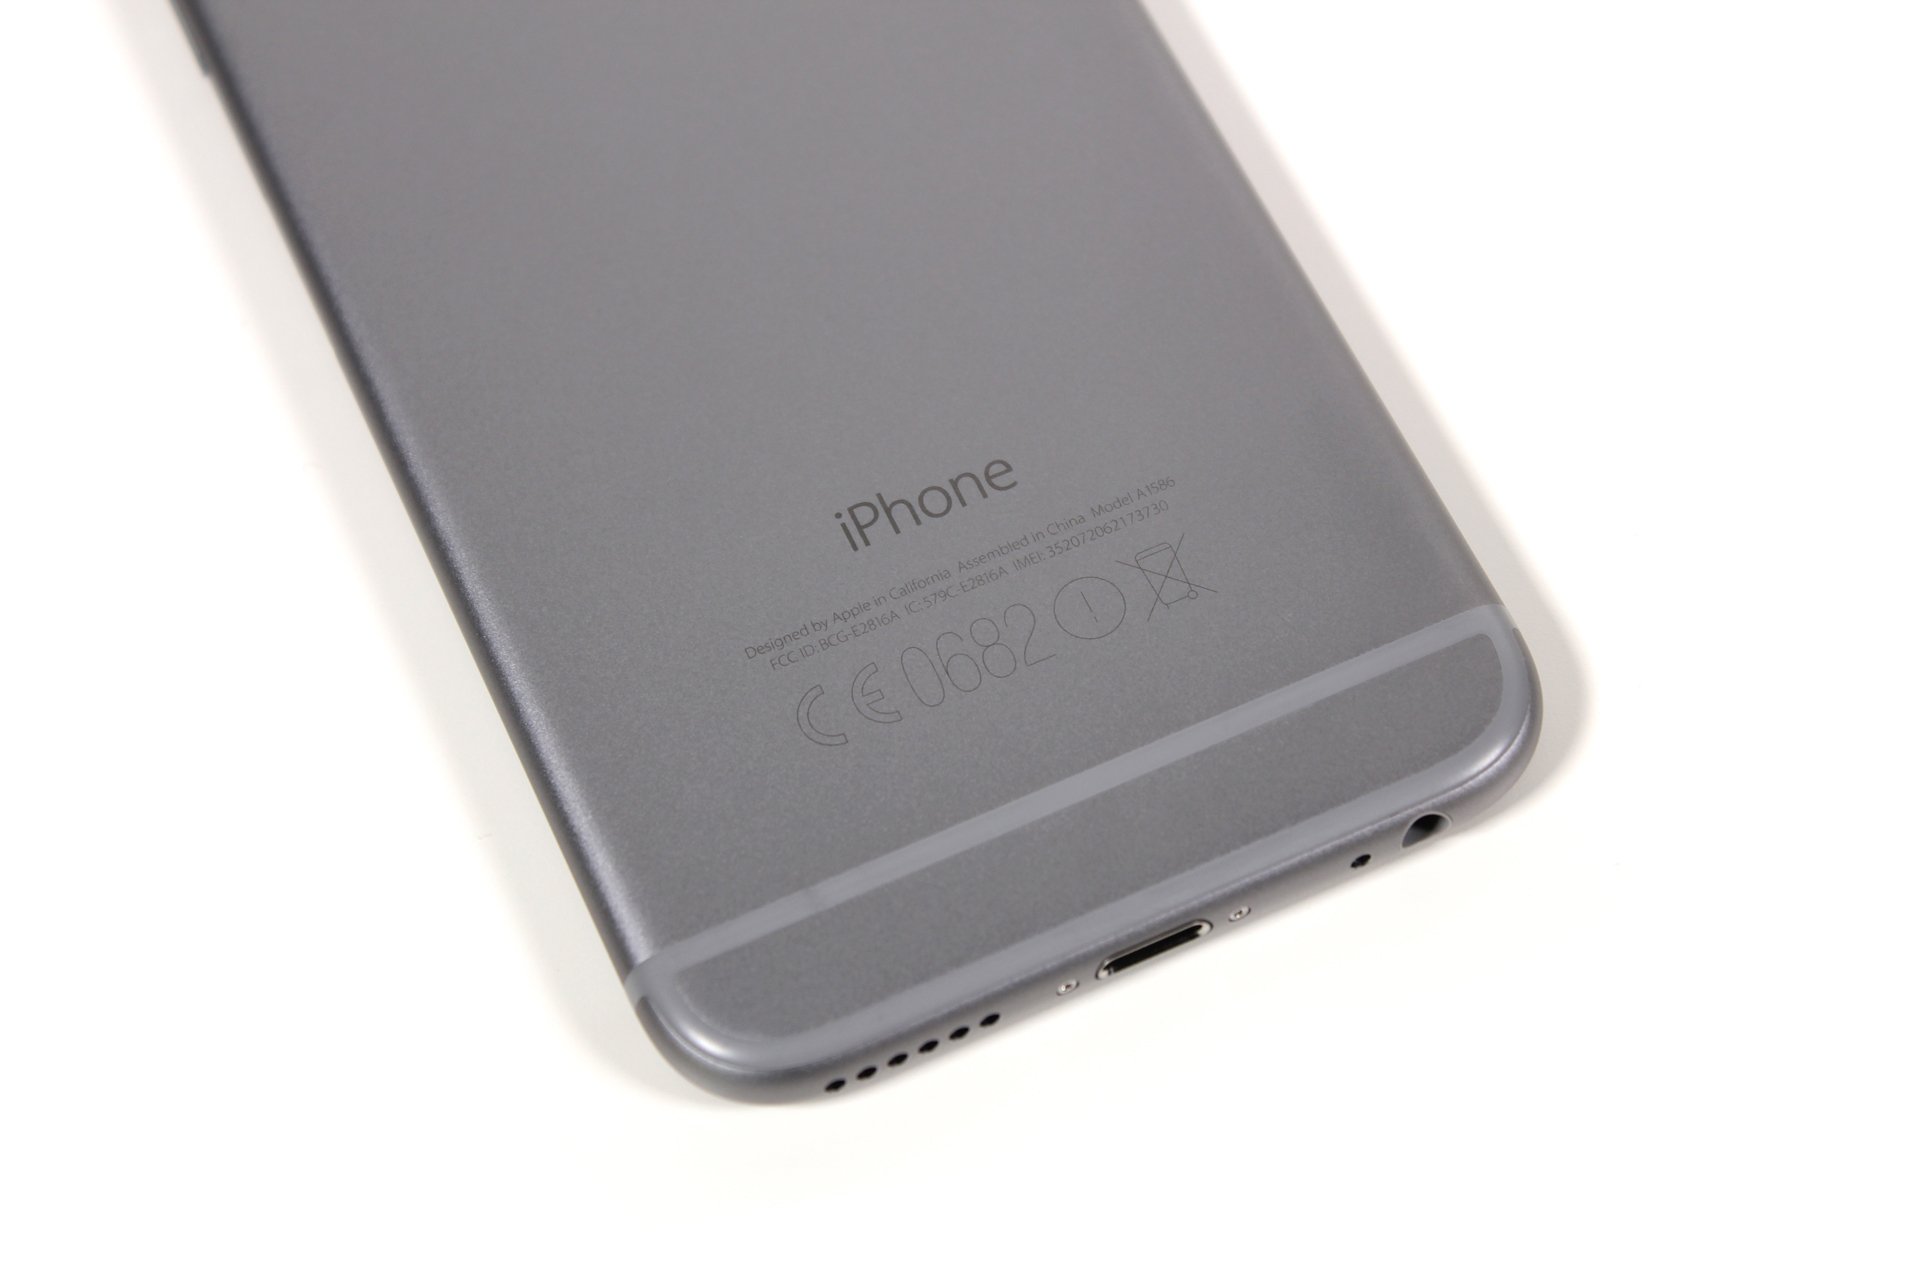 iPhone 6 - Untere Rückseite